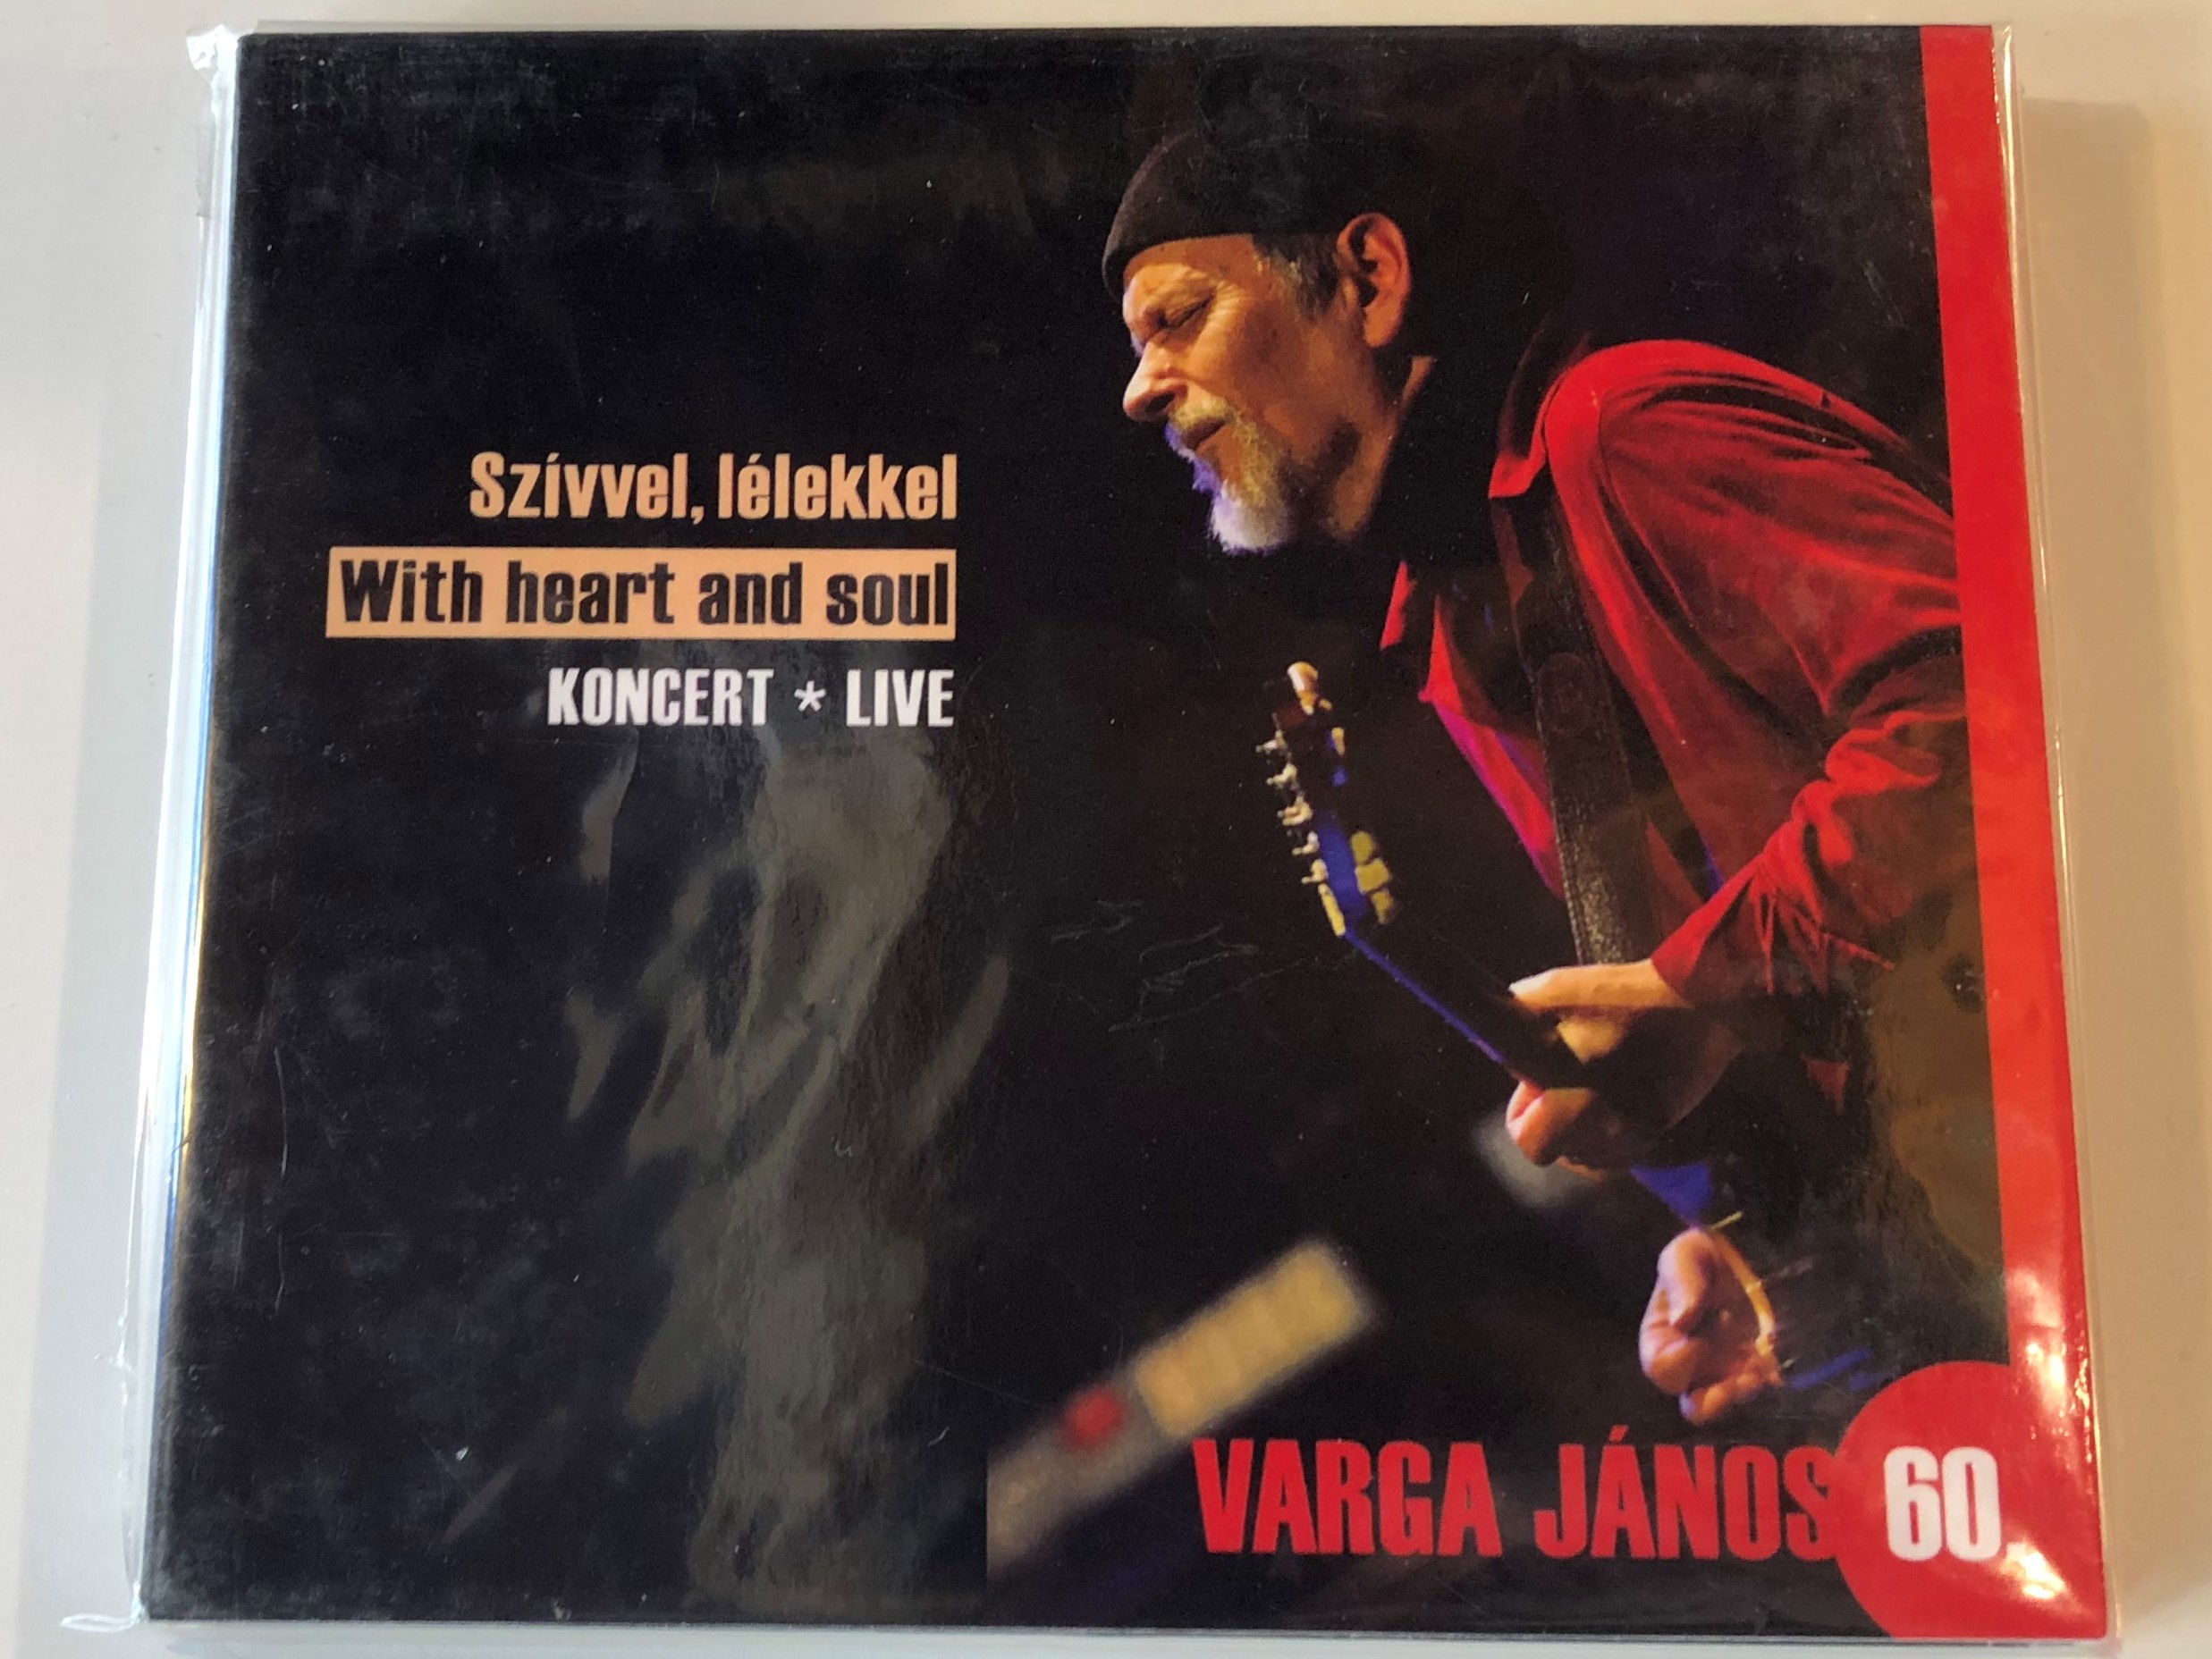 sz-vvel-l-lekkel-with-heart-and-soul-varga-janos-60-koncert-live-2x-audio-cd-2015-jvp-003-004.jpg